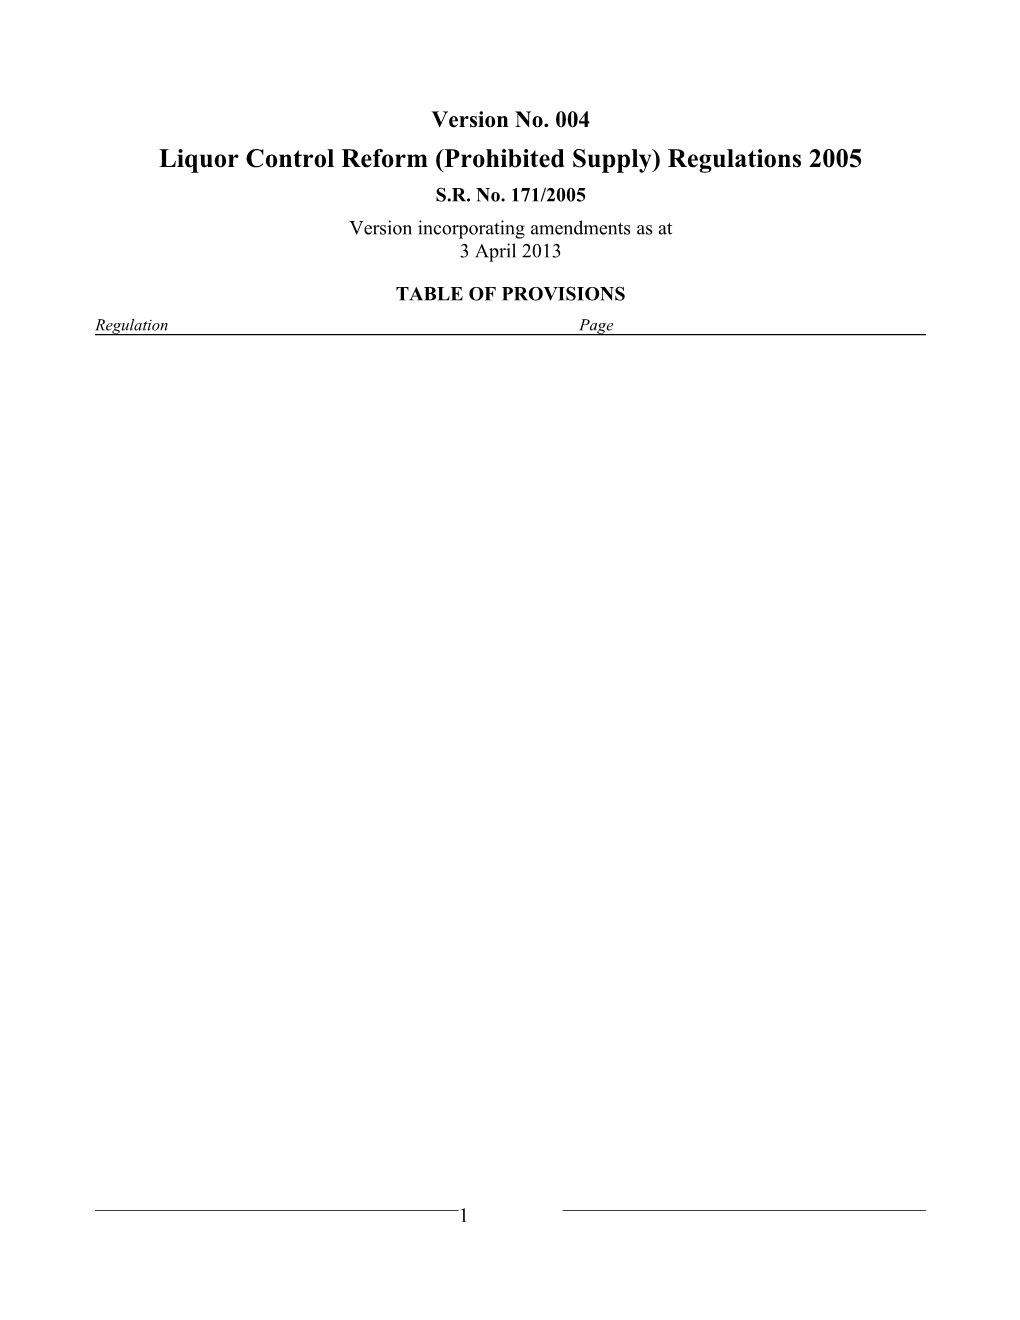 Liquor Control Reform (Prohibited Supply) Regulations 2005